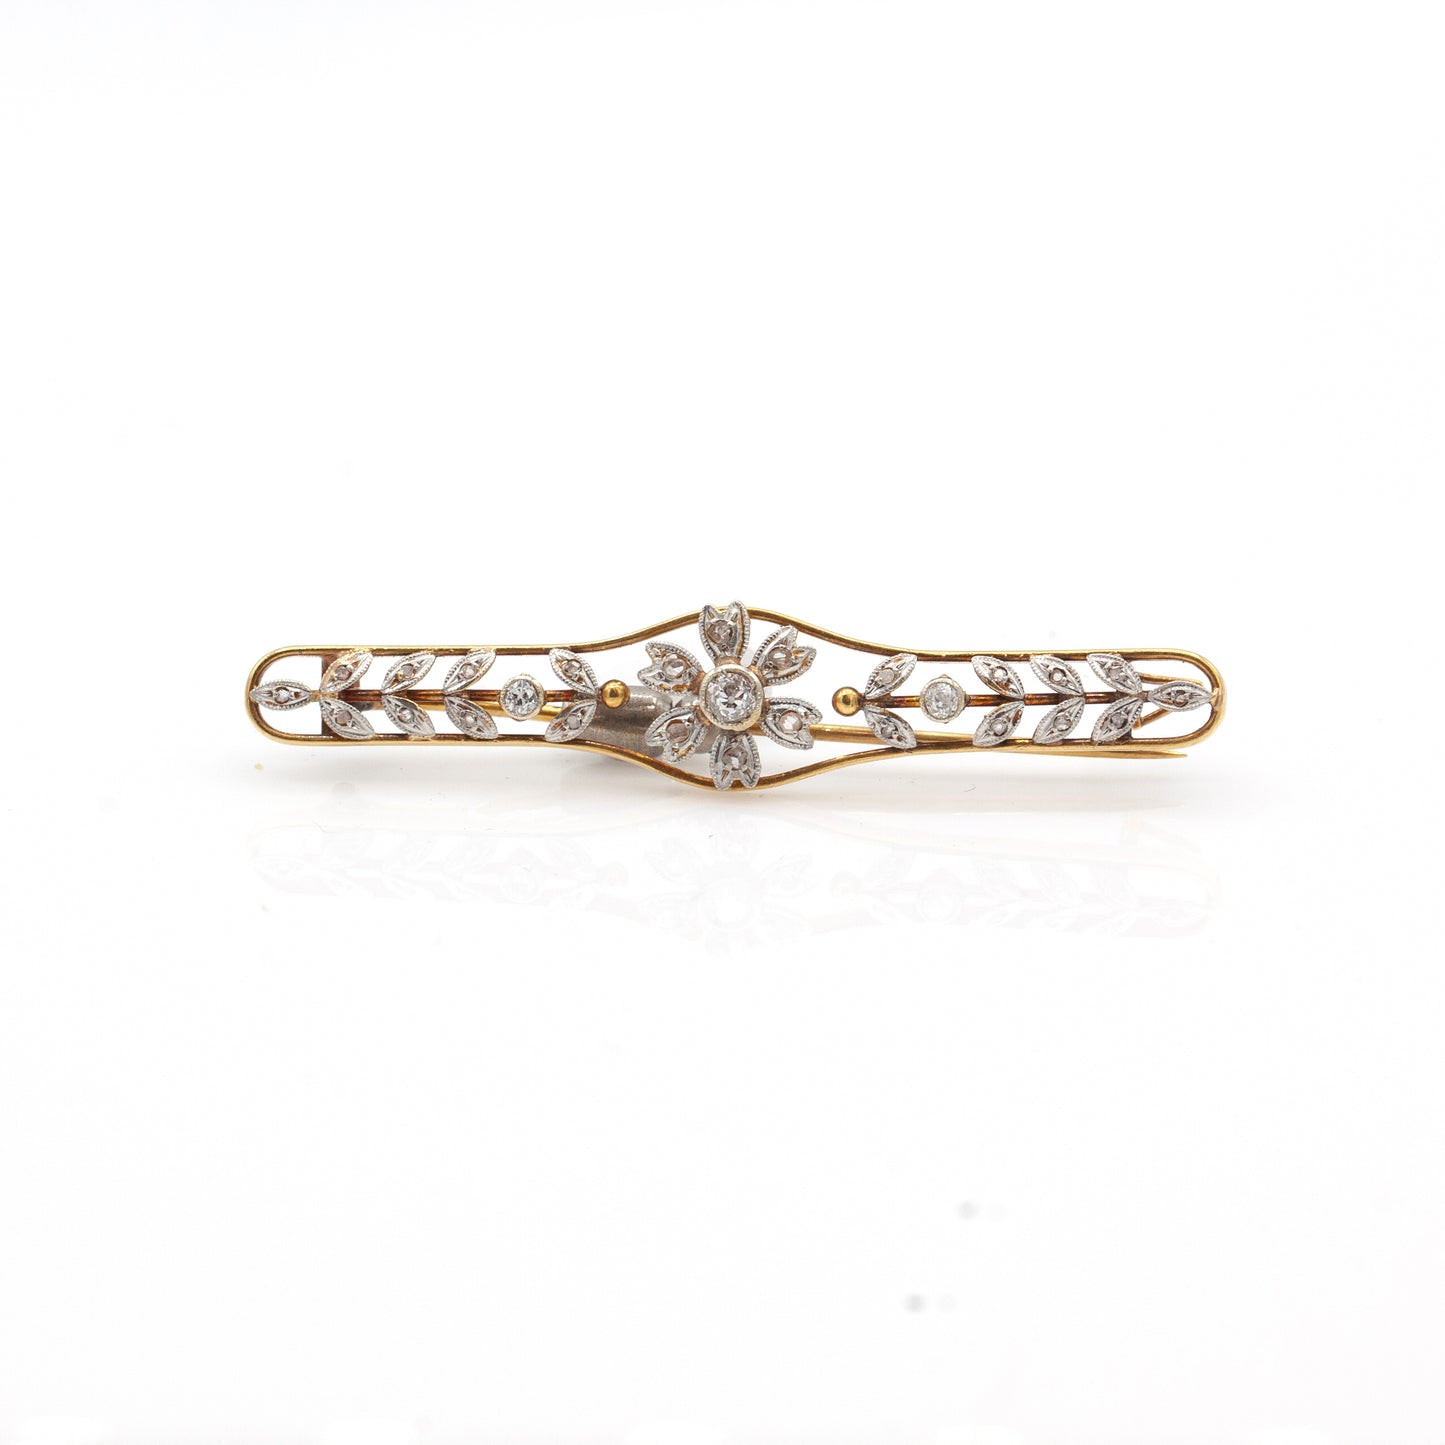 Estate Collection Art Deco Diamond Pin